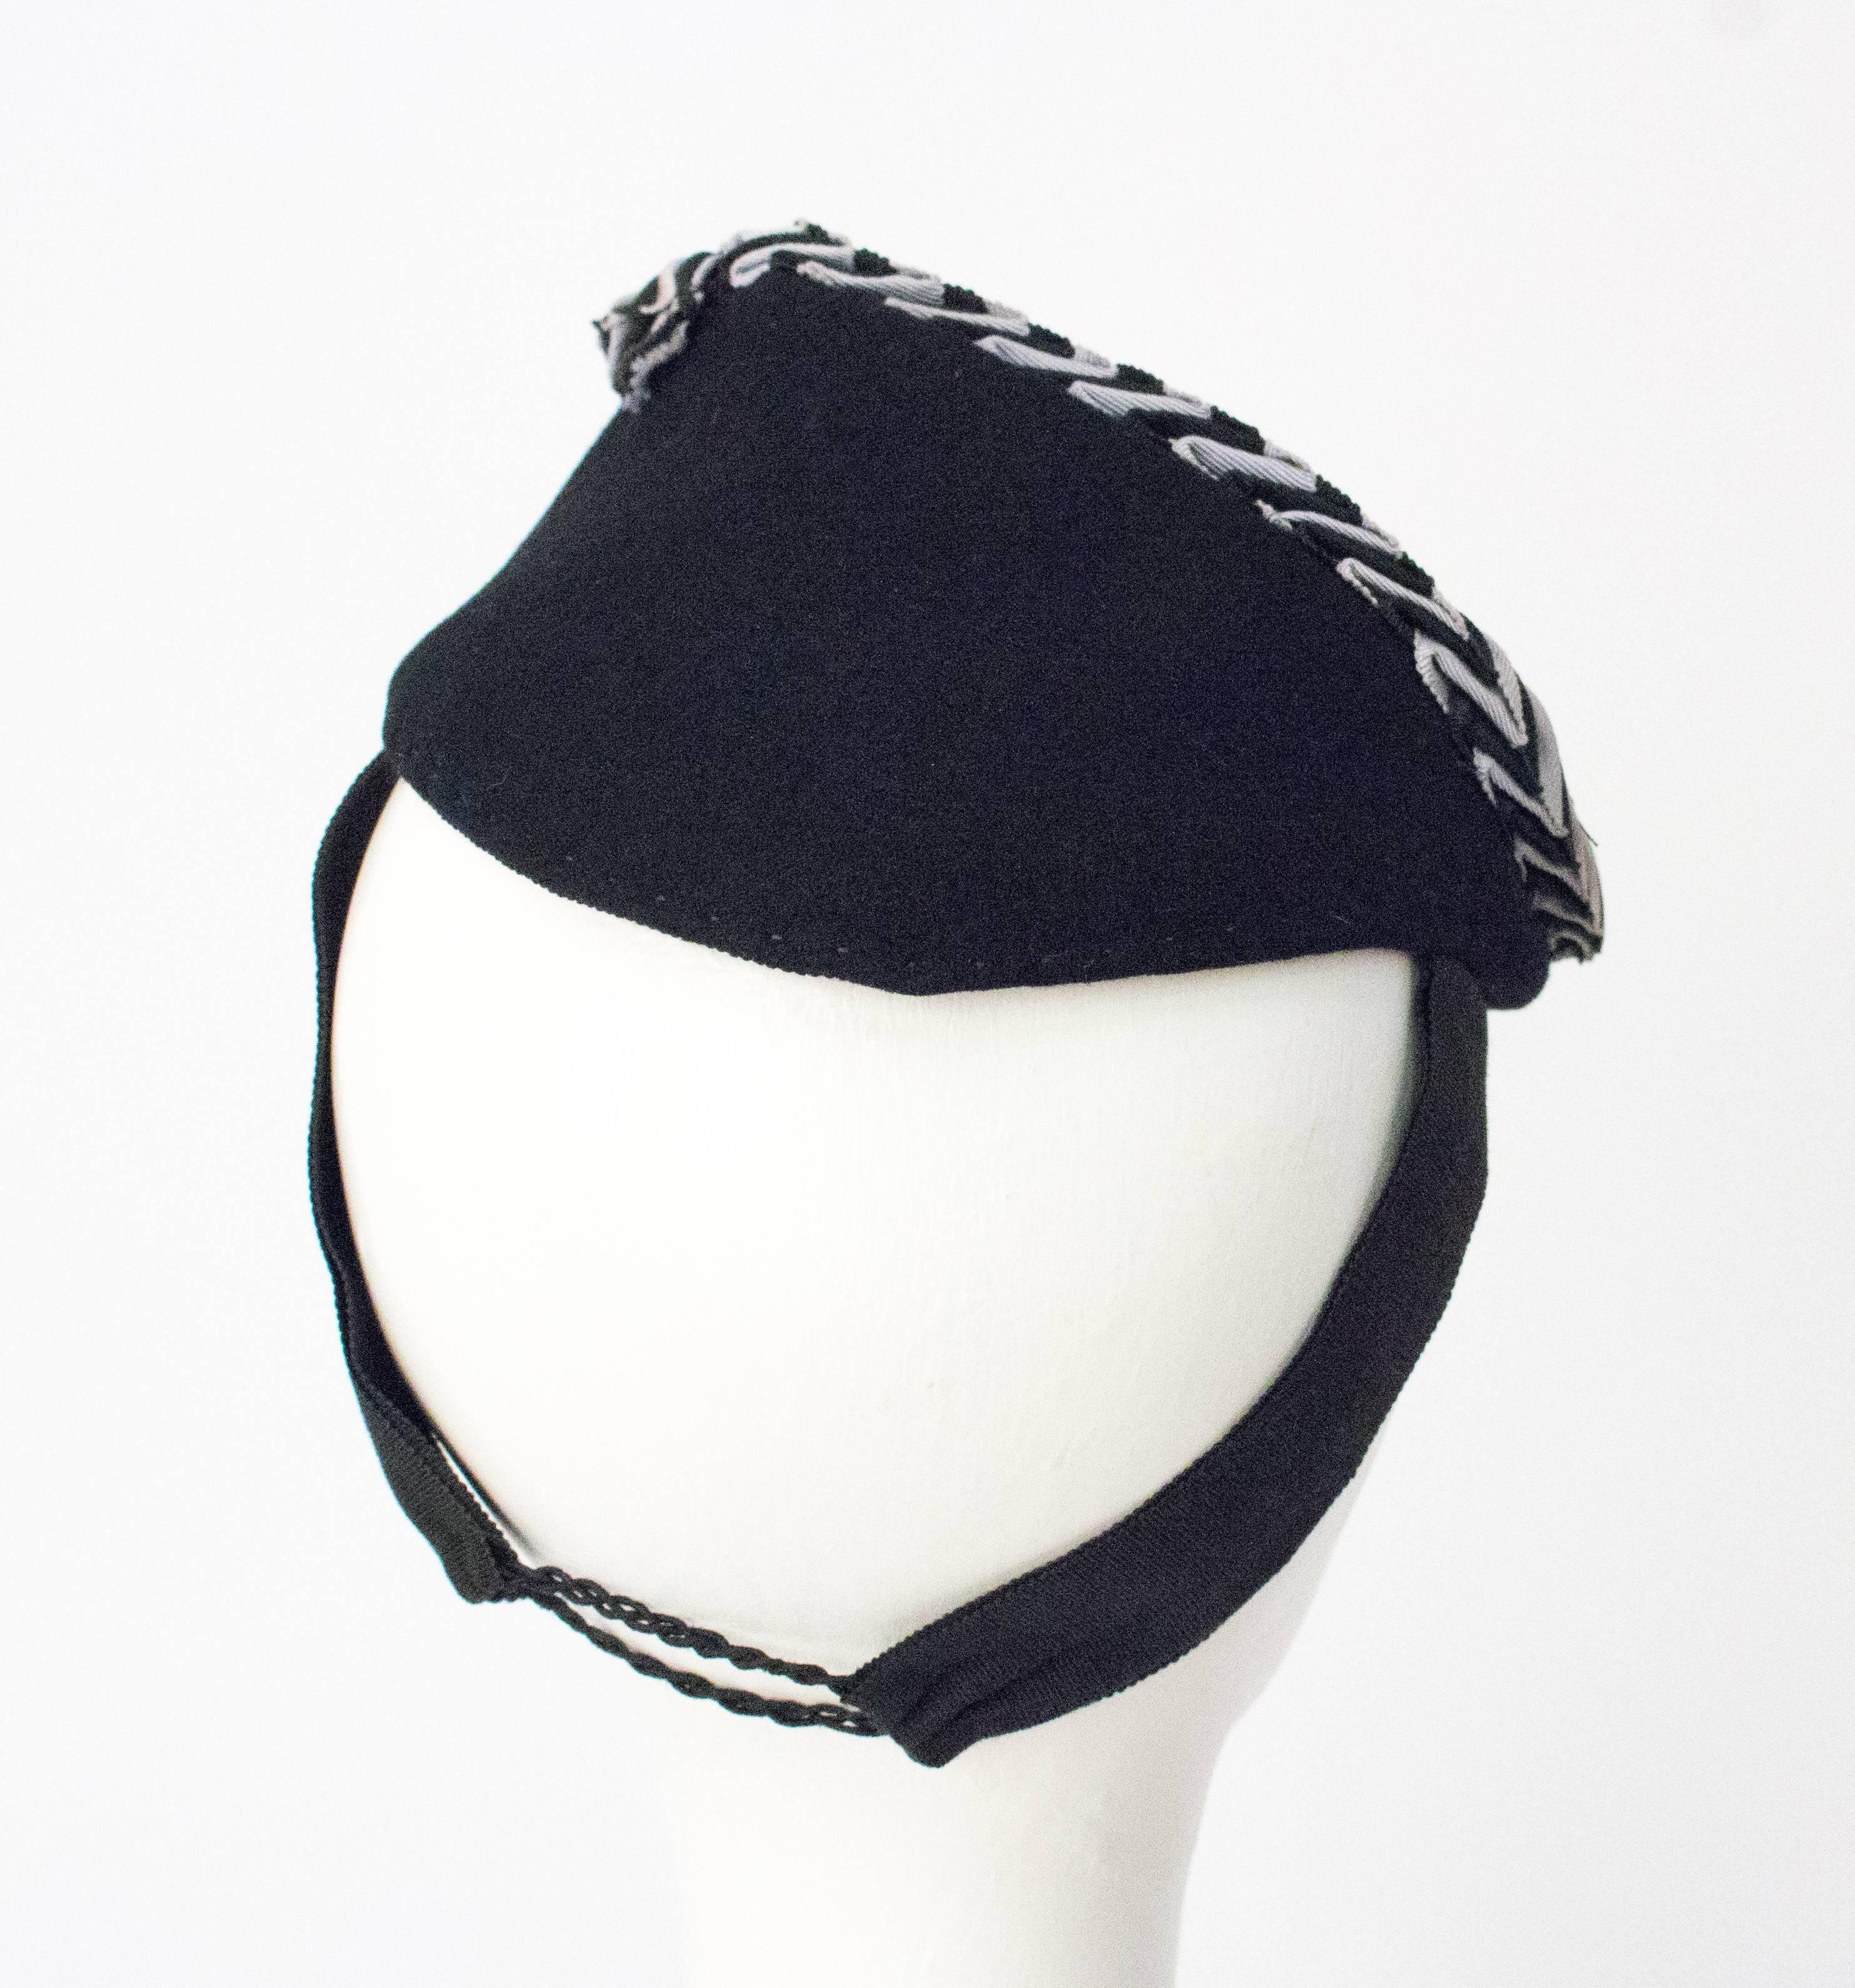 30 Black and White Swirl Fashion Hat 1